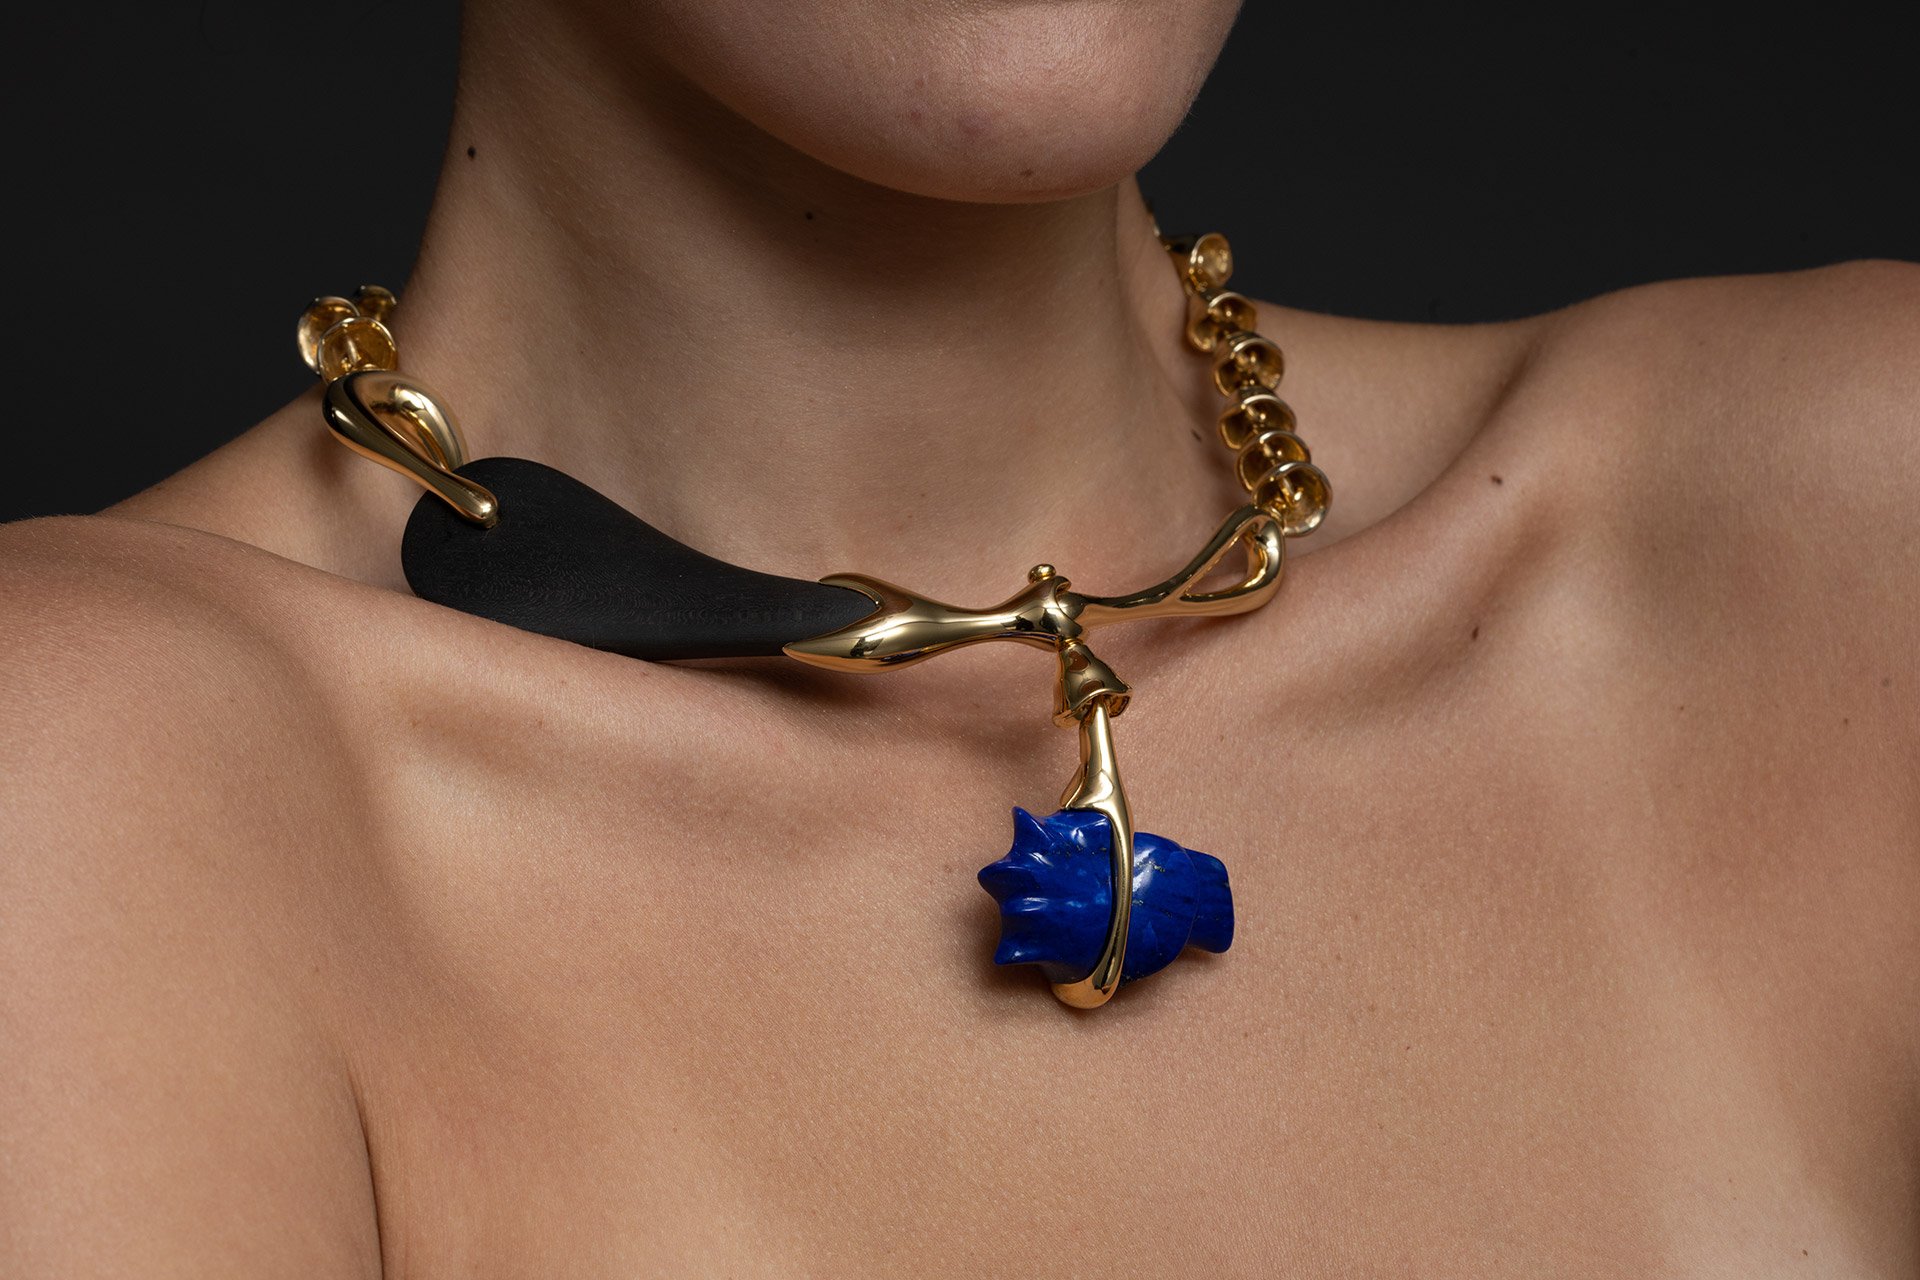 HACHA-egypt-necklaces-collection-julio-martinez-barnetche-marion-friedmann-gallery-LR-egypt254.jpg